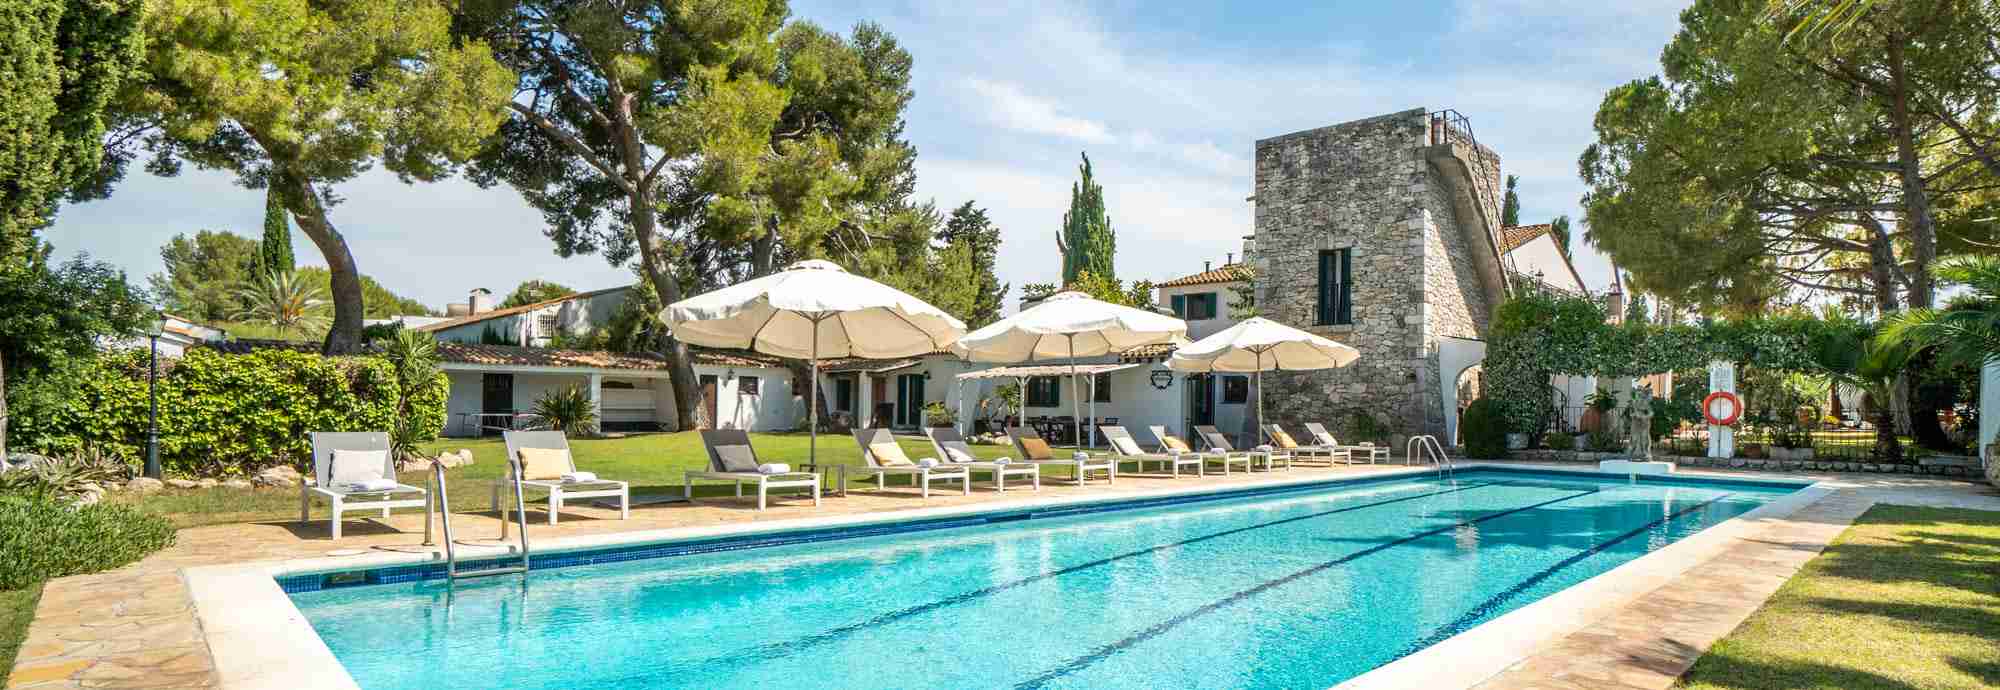 Villa para grupos a 5 mins de playas de Sitges con piscina privada de 22 metros